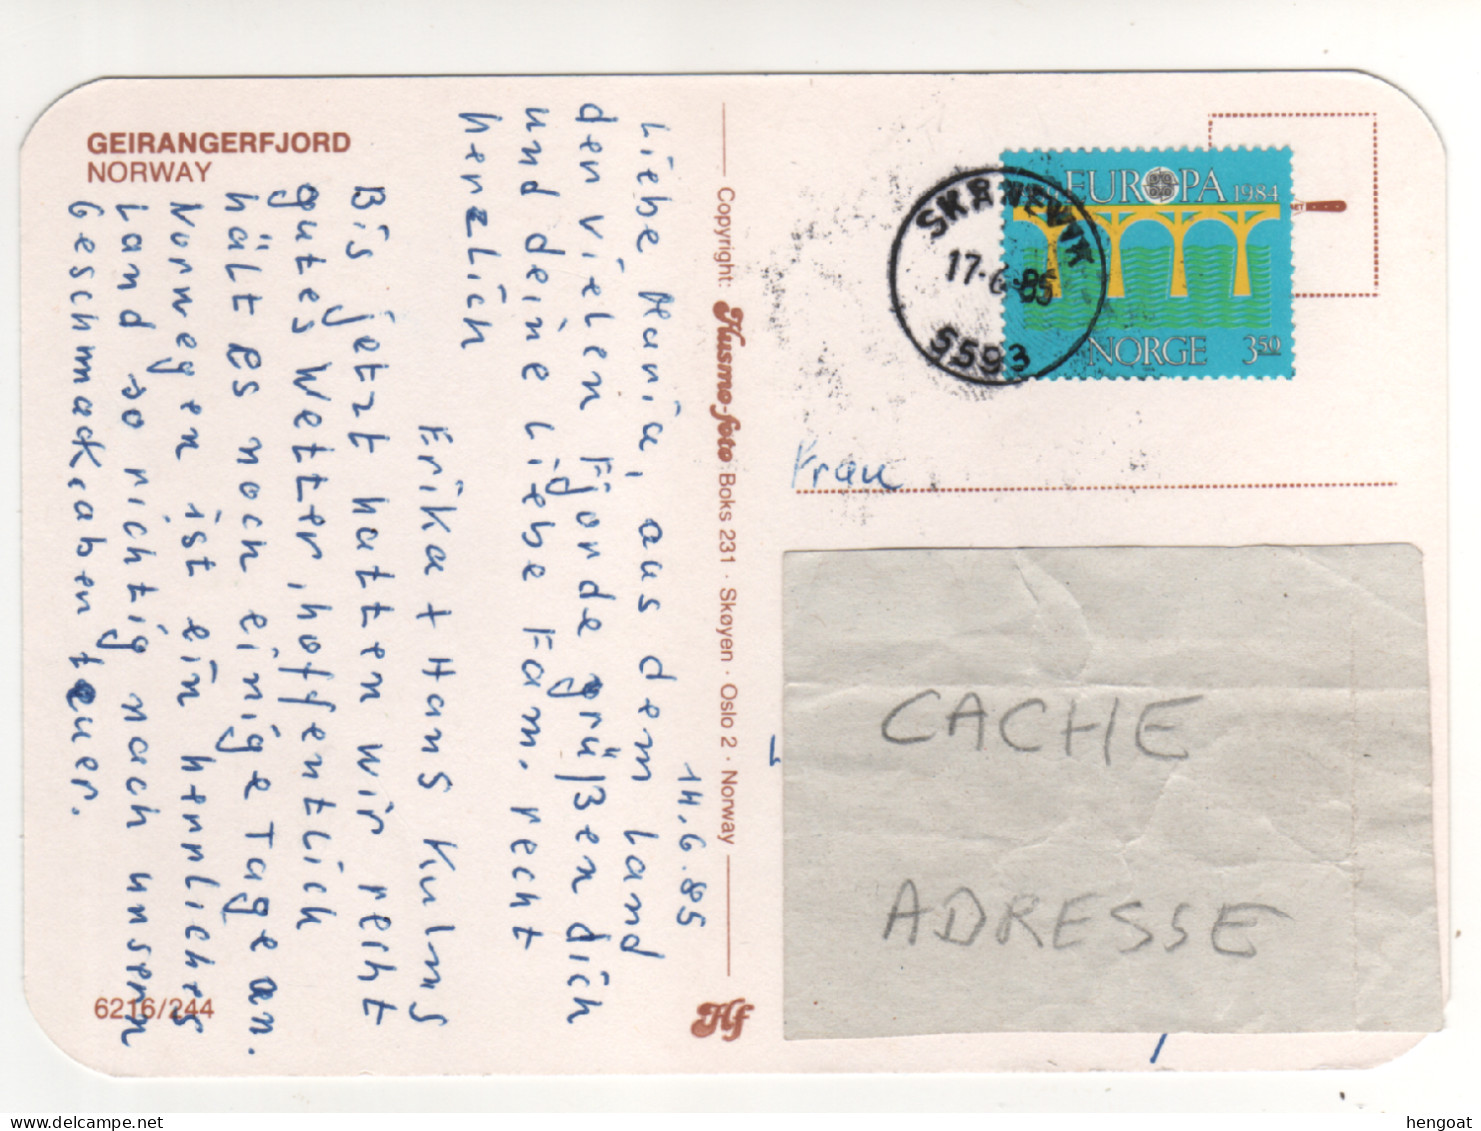 Timbre , Stamp Yvert N° 861 " EUROPA " Sur CP , Carte , Postcard Du 17/06/85 - Lettres & Documents